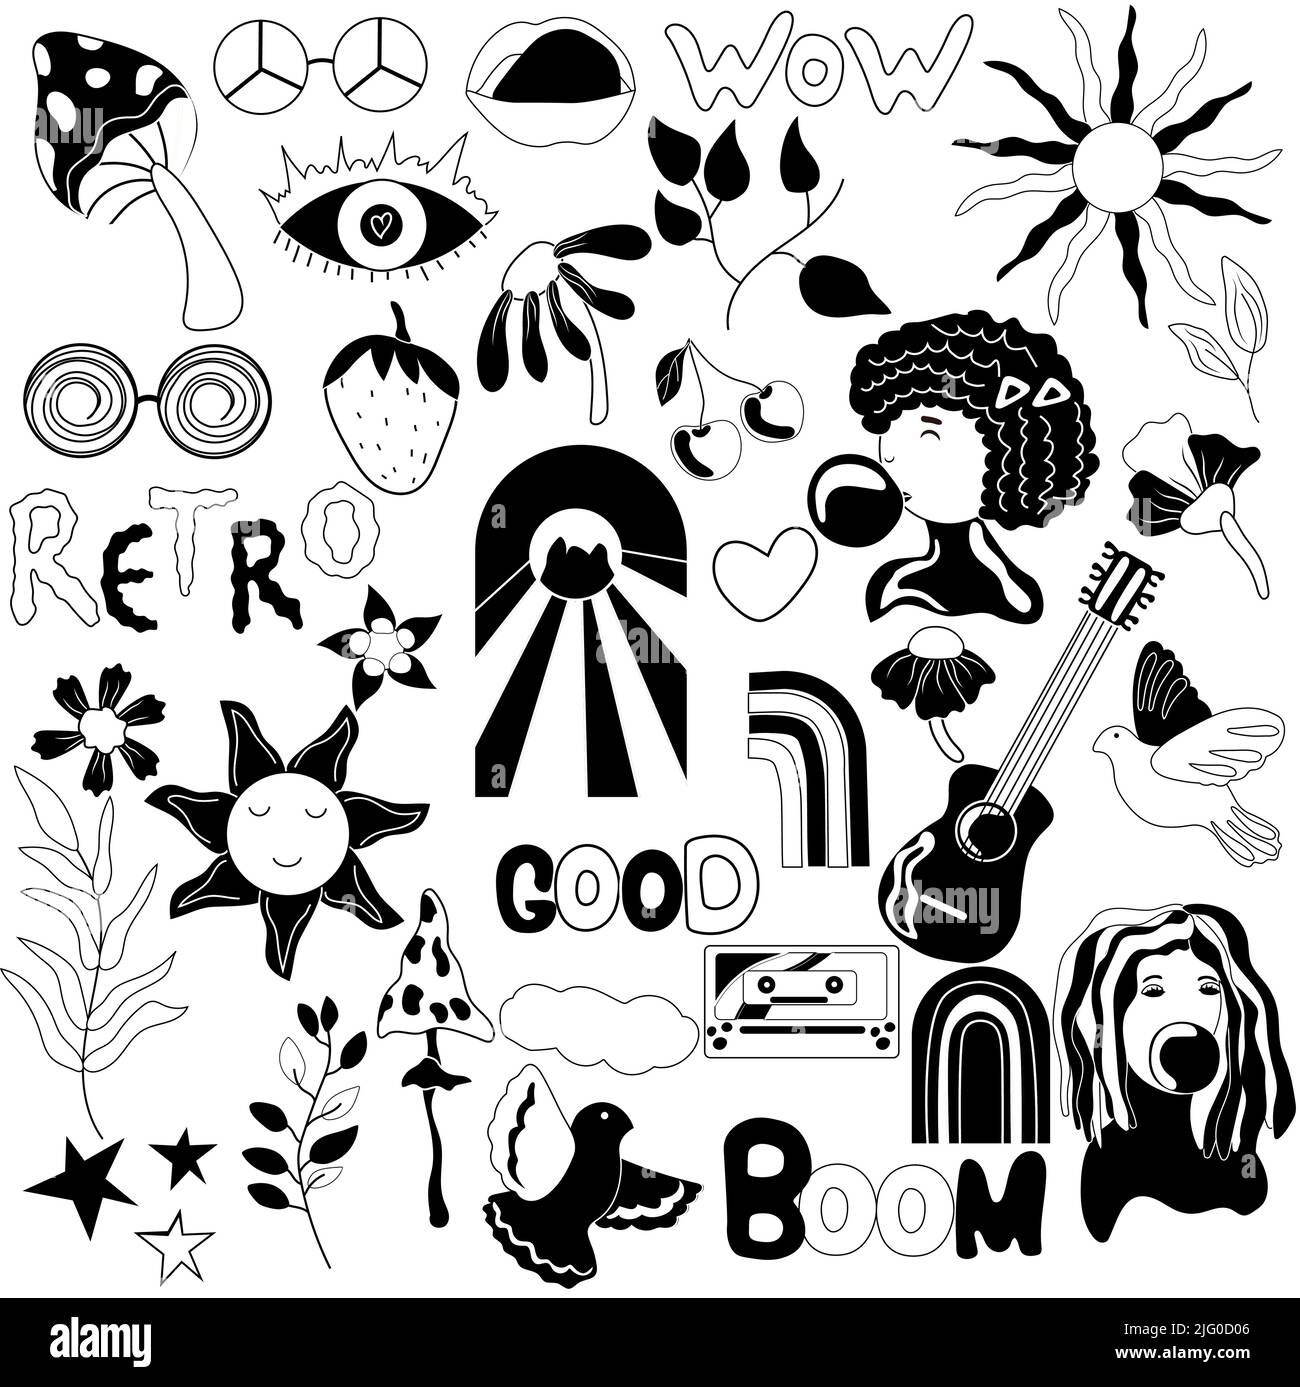 Black and white 70s groovy element, girl, sun, flowers, leaves, mushroom, bird, retro rainbows and lettering. Vintage hippy style. Vector illustration. Stock Vector